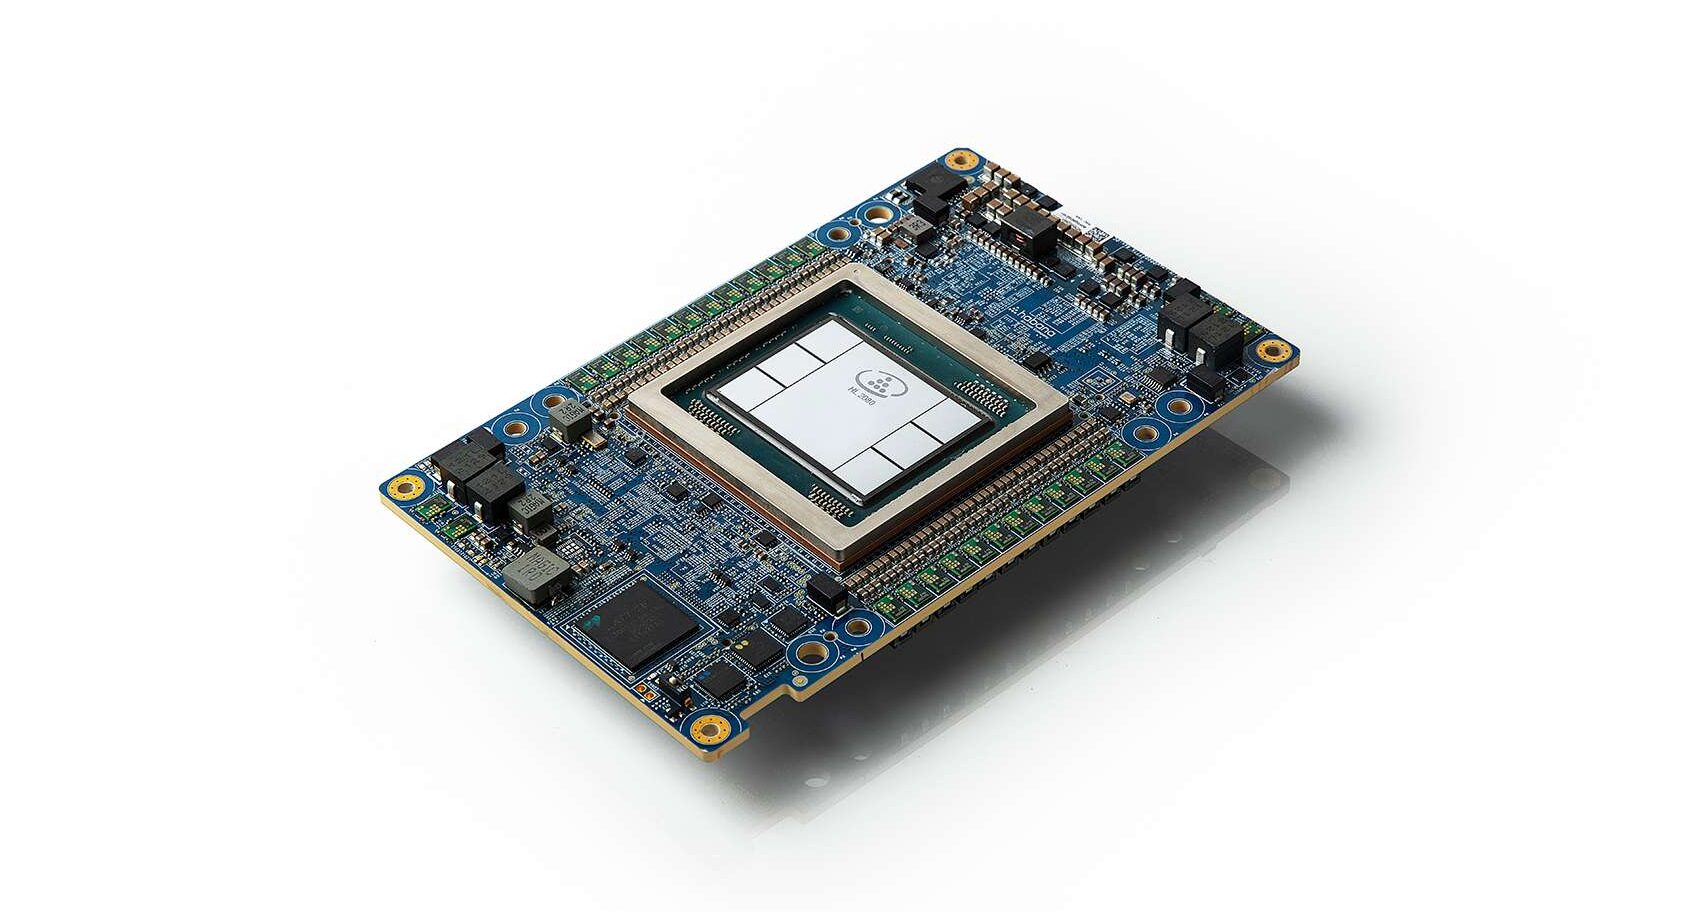 Intel’s Habana Labs designs next-gen AI processors – Gaudi2 and Greco